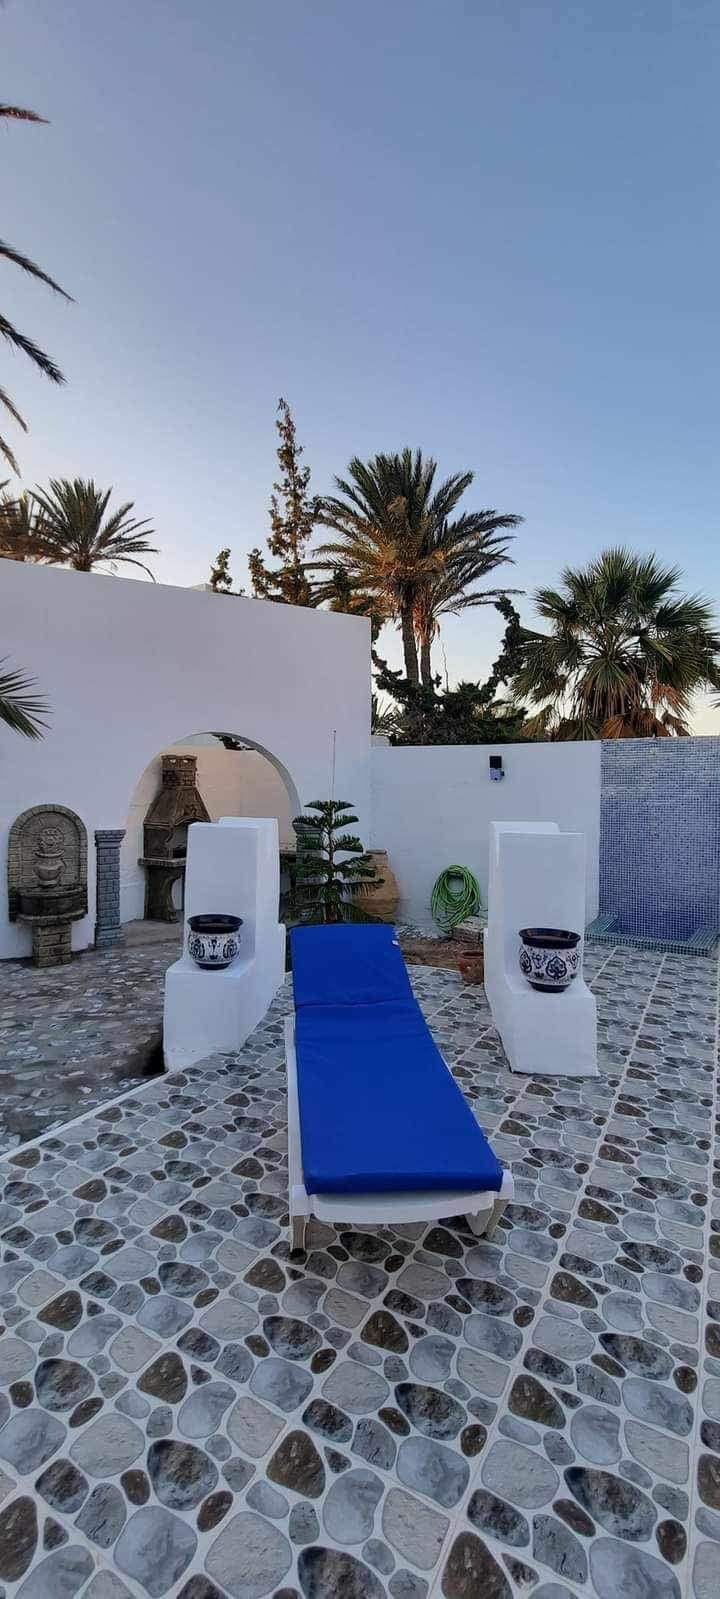 Djerba - Midoun Zone Hoteliere Location vacances Maisons Villa avec piscine zone touristique